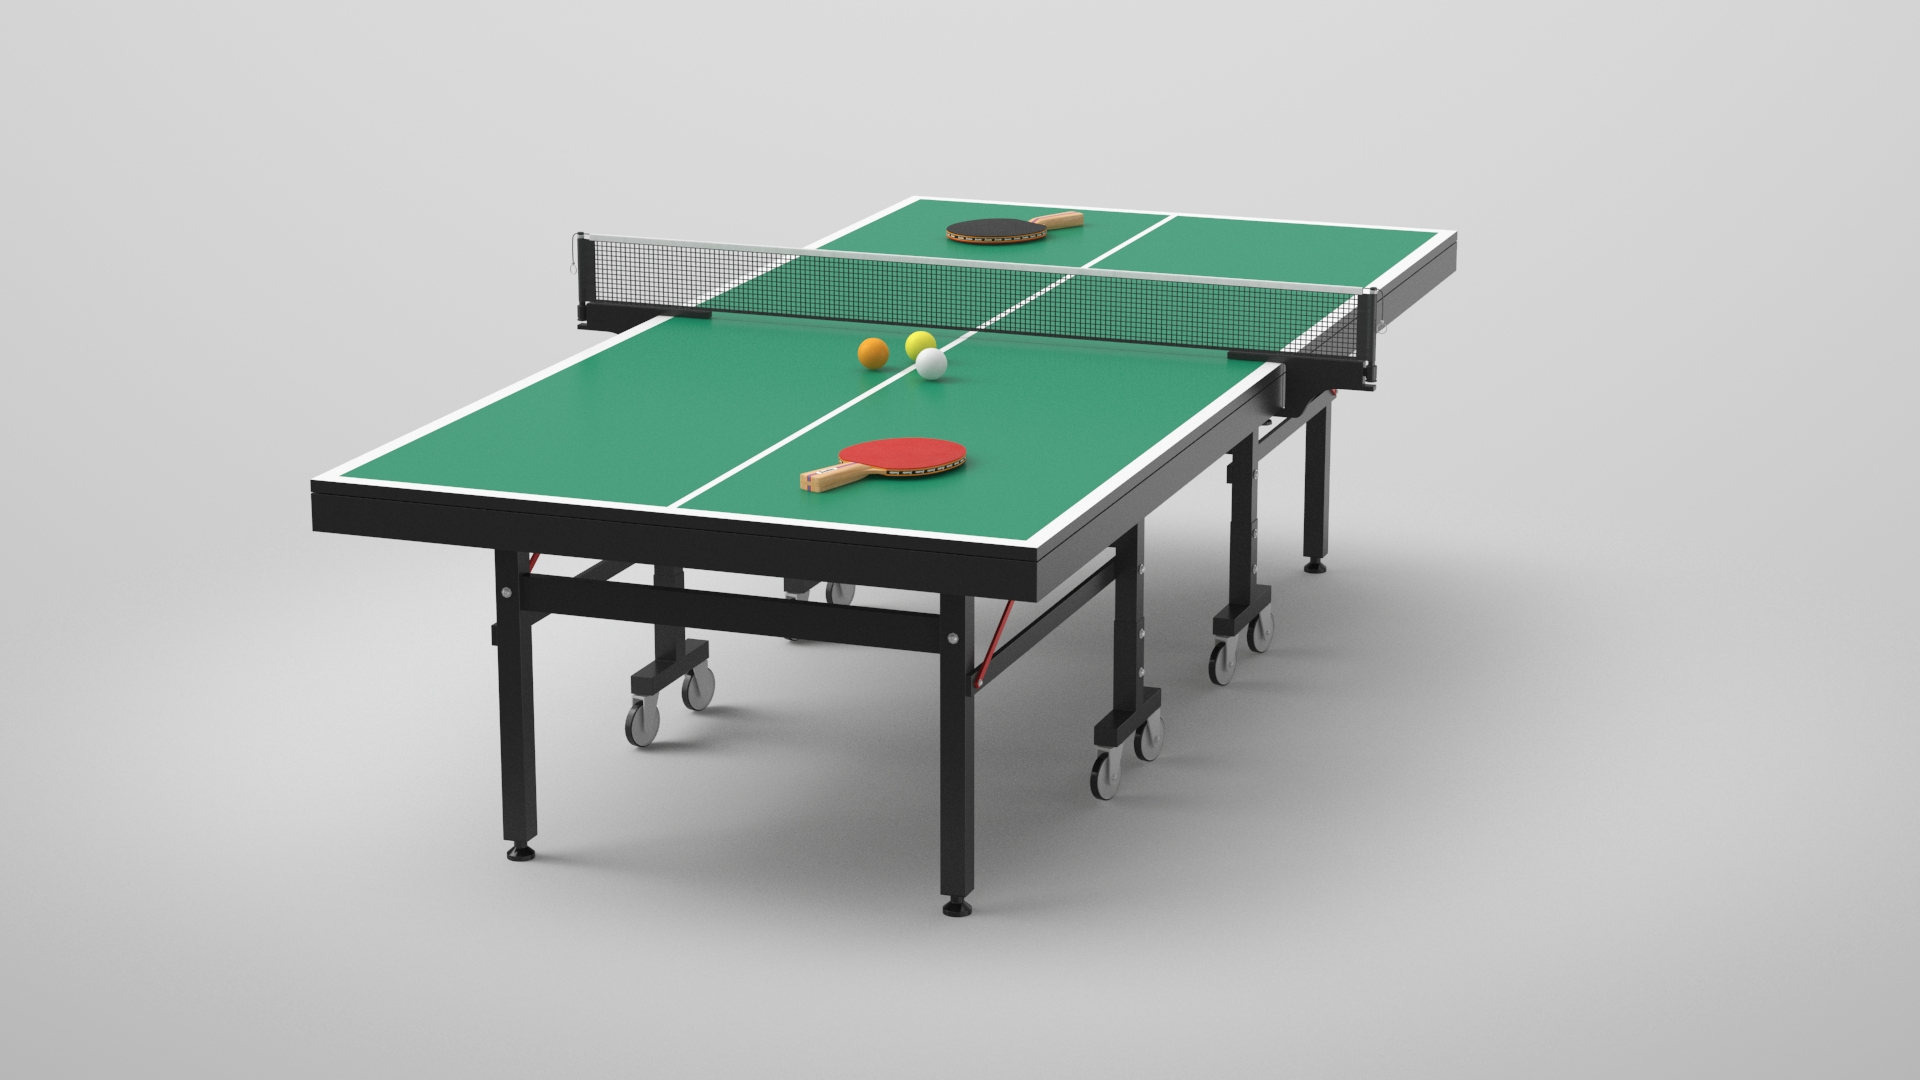 Ping Pong Table Set 01 3D model